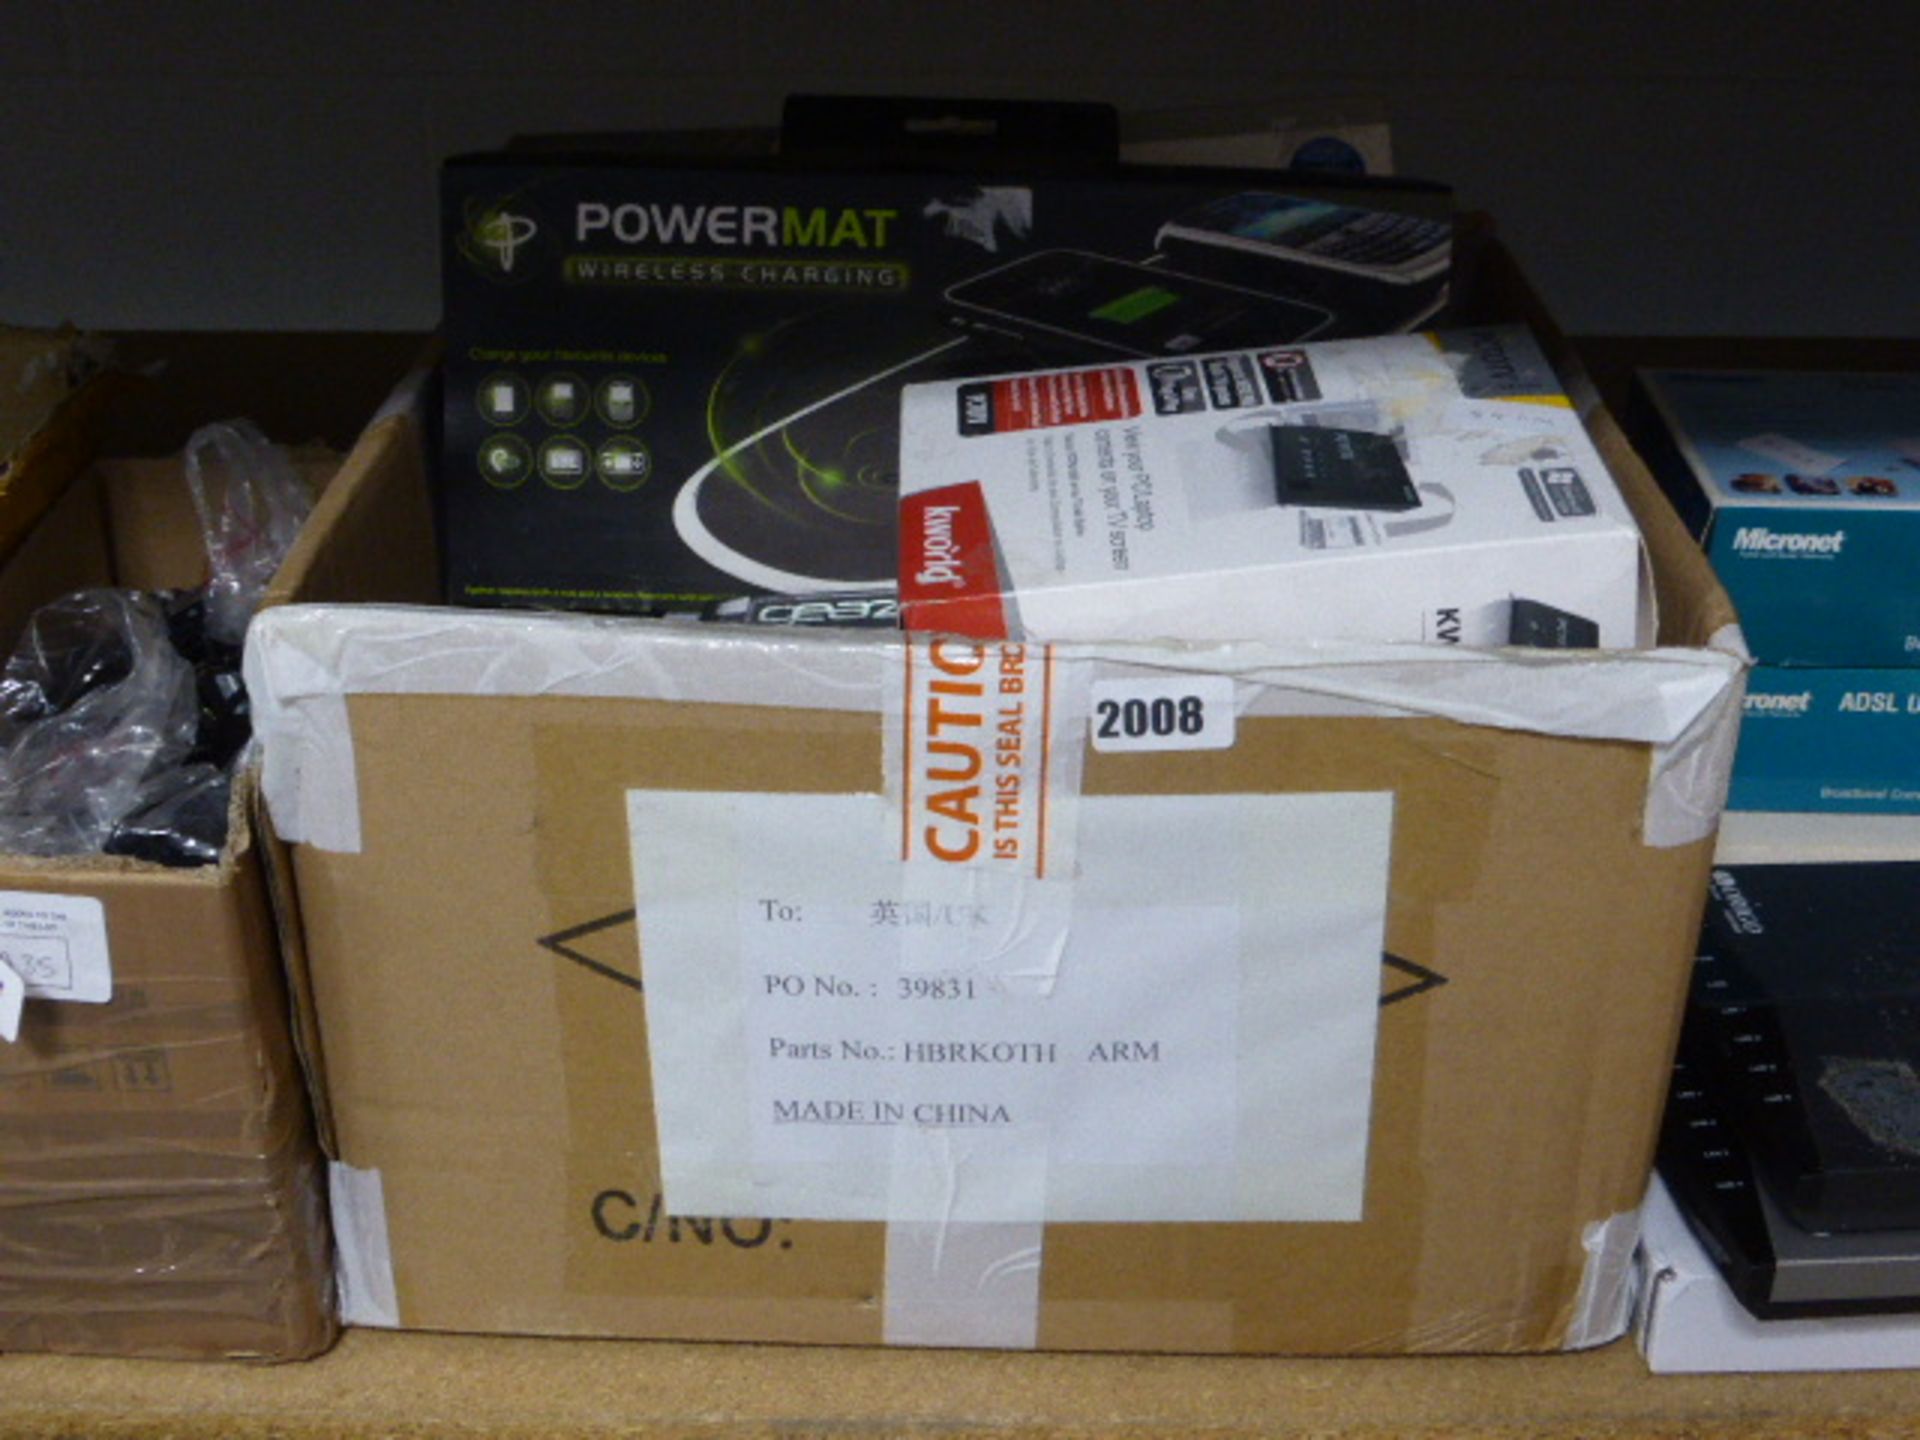 Box to inc. compact digital film scanner, PC TV power mac wireless charging mat, etc